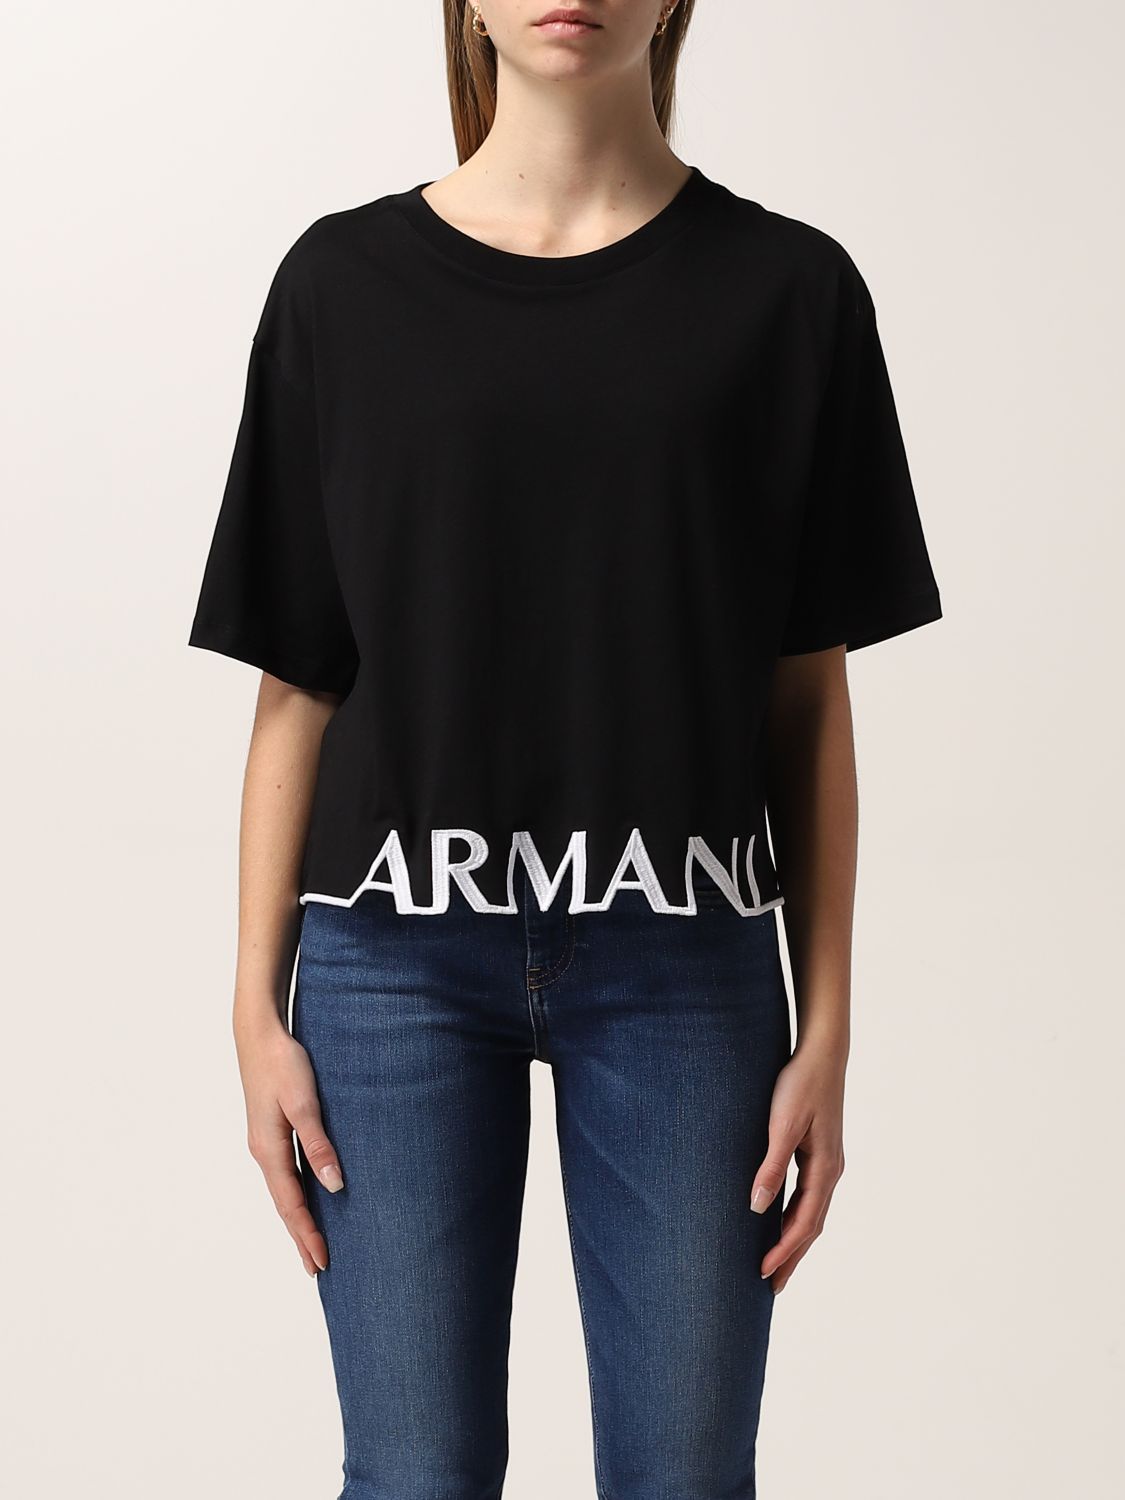 ARMANI EXCHANGE: cotton T-shirt with logo - Black | Armani Exchange t ...